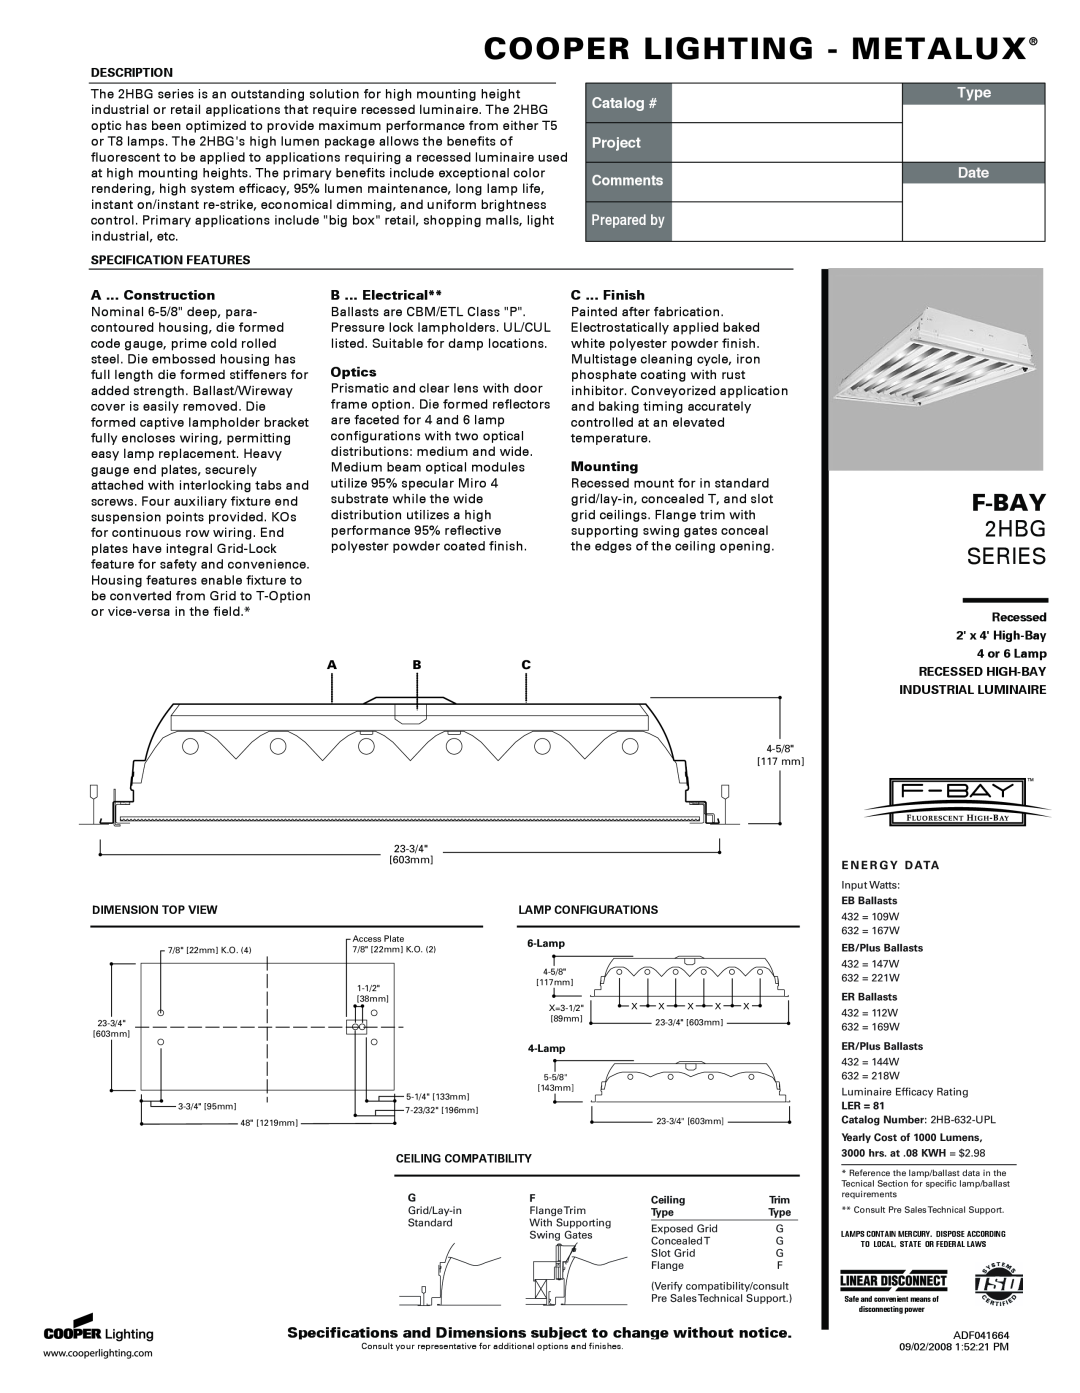 Cooper Lighting P4PE-X/TE specifications Cooper Lighting - Metalux, F-Bay, 2HBG SERIES, Catalog #, Project Comments, Type 